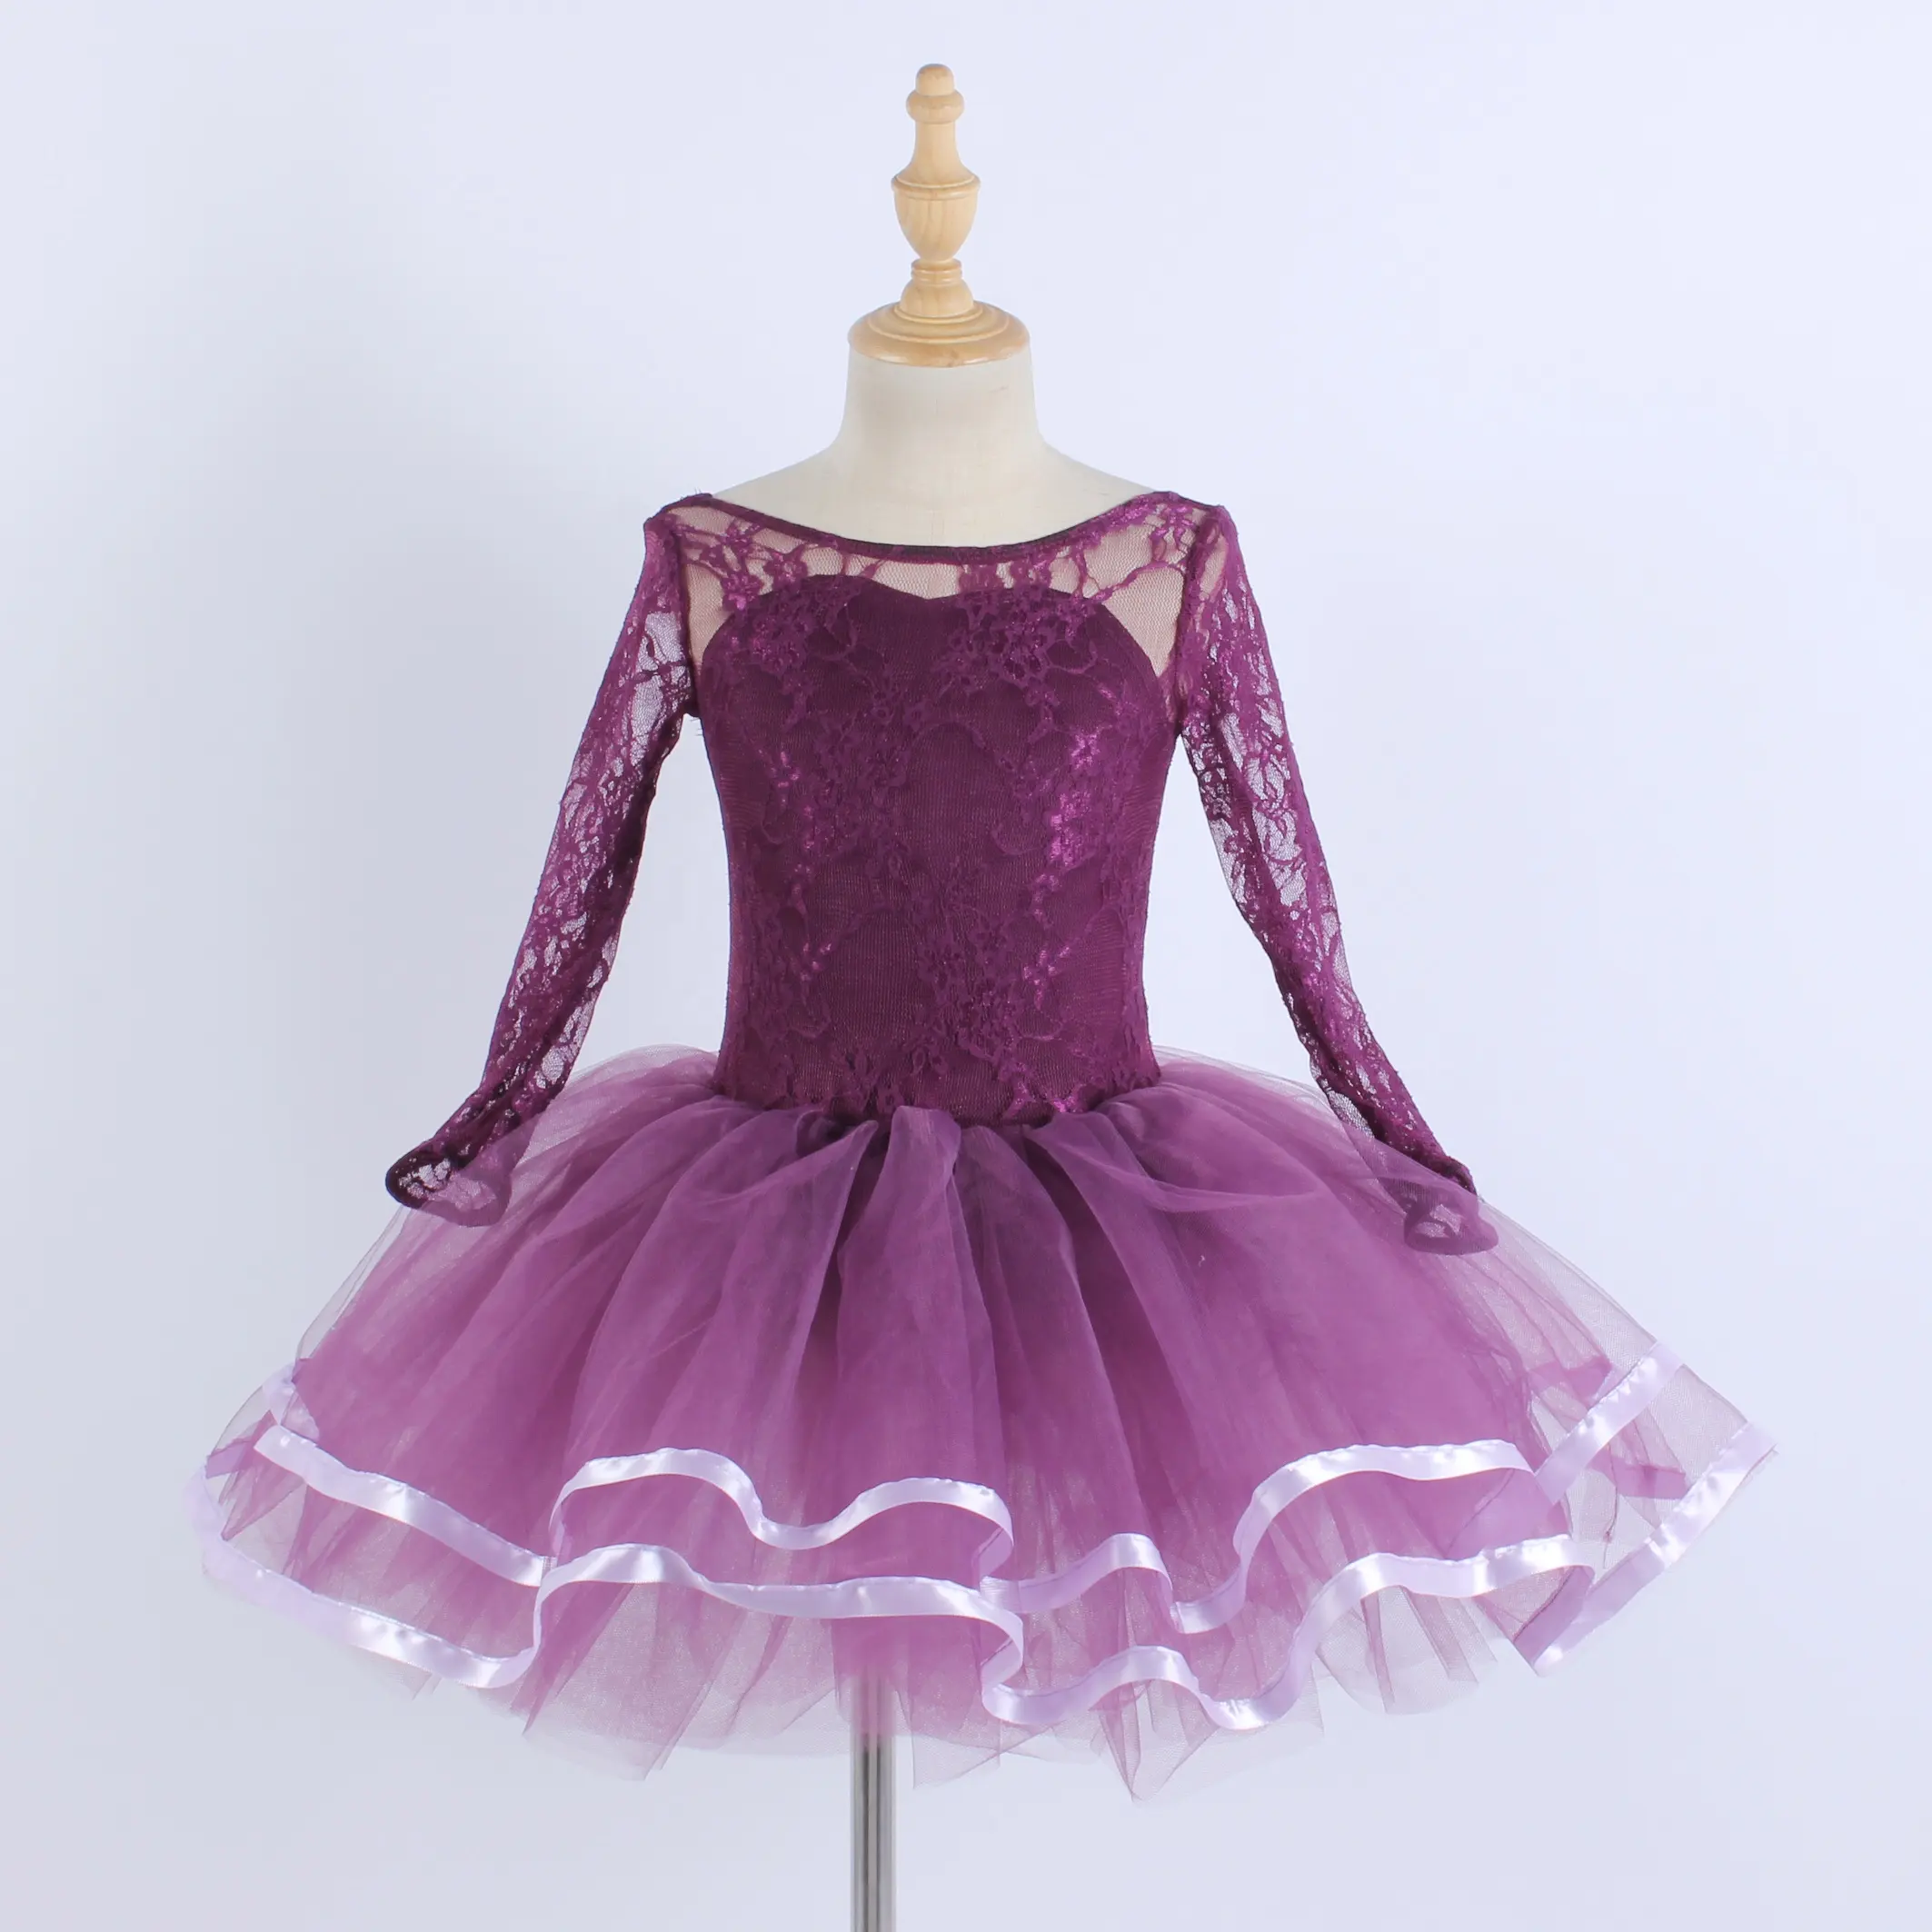 Aubergine lace ballet dress little girl lyrical dance wear satin ribbon soft mesh stage performance dance costume